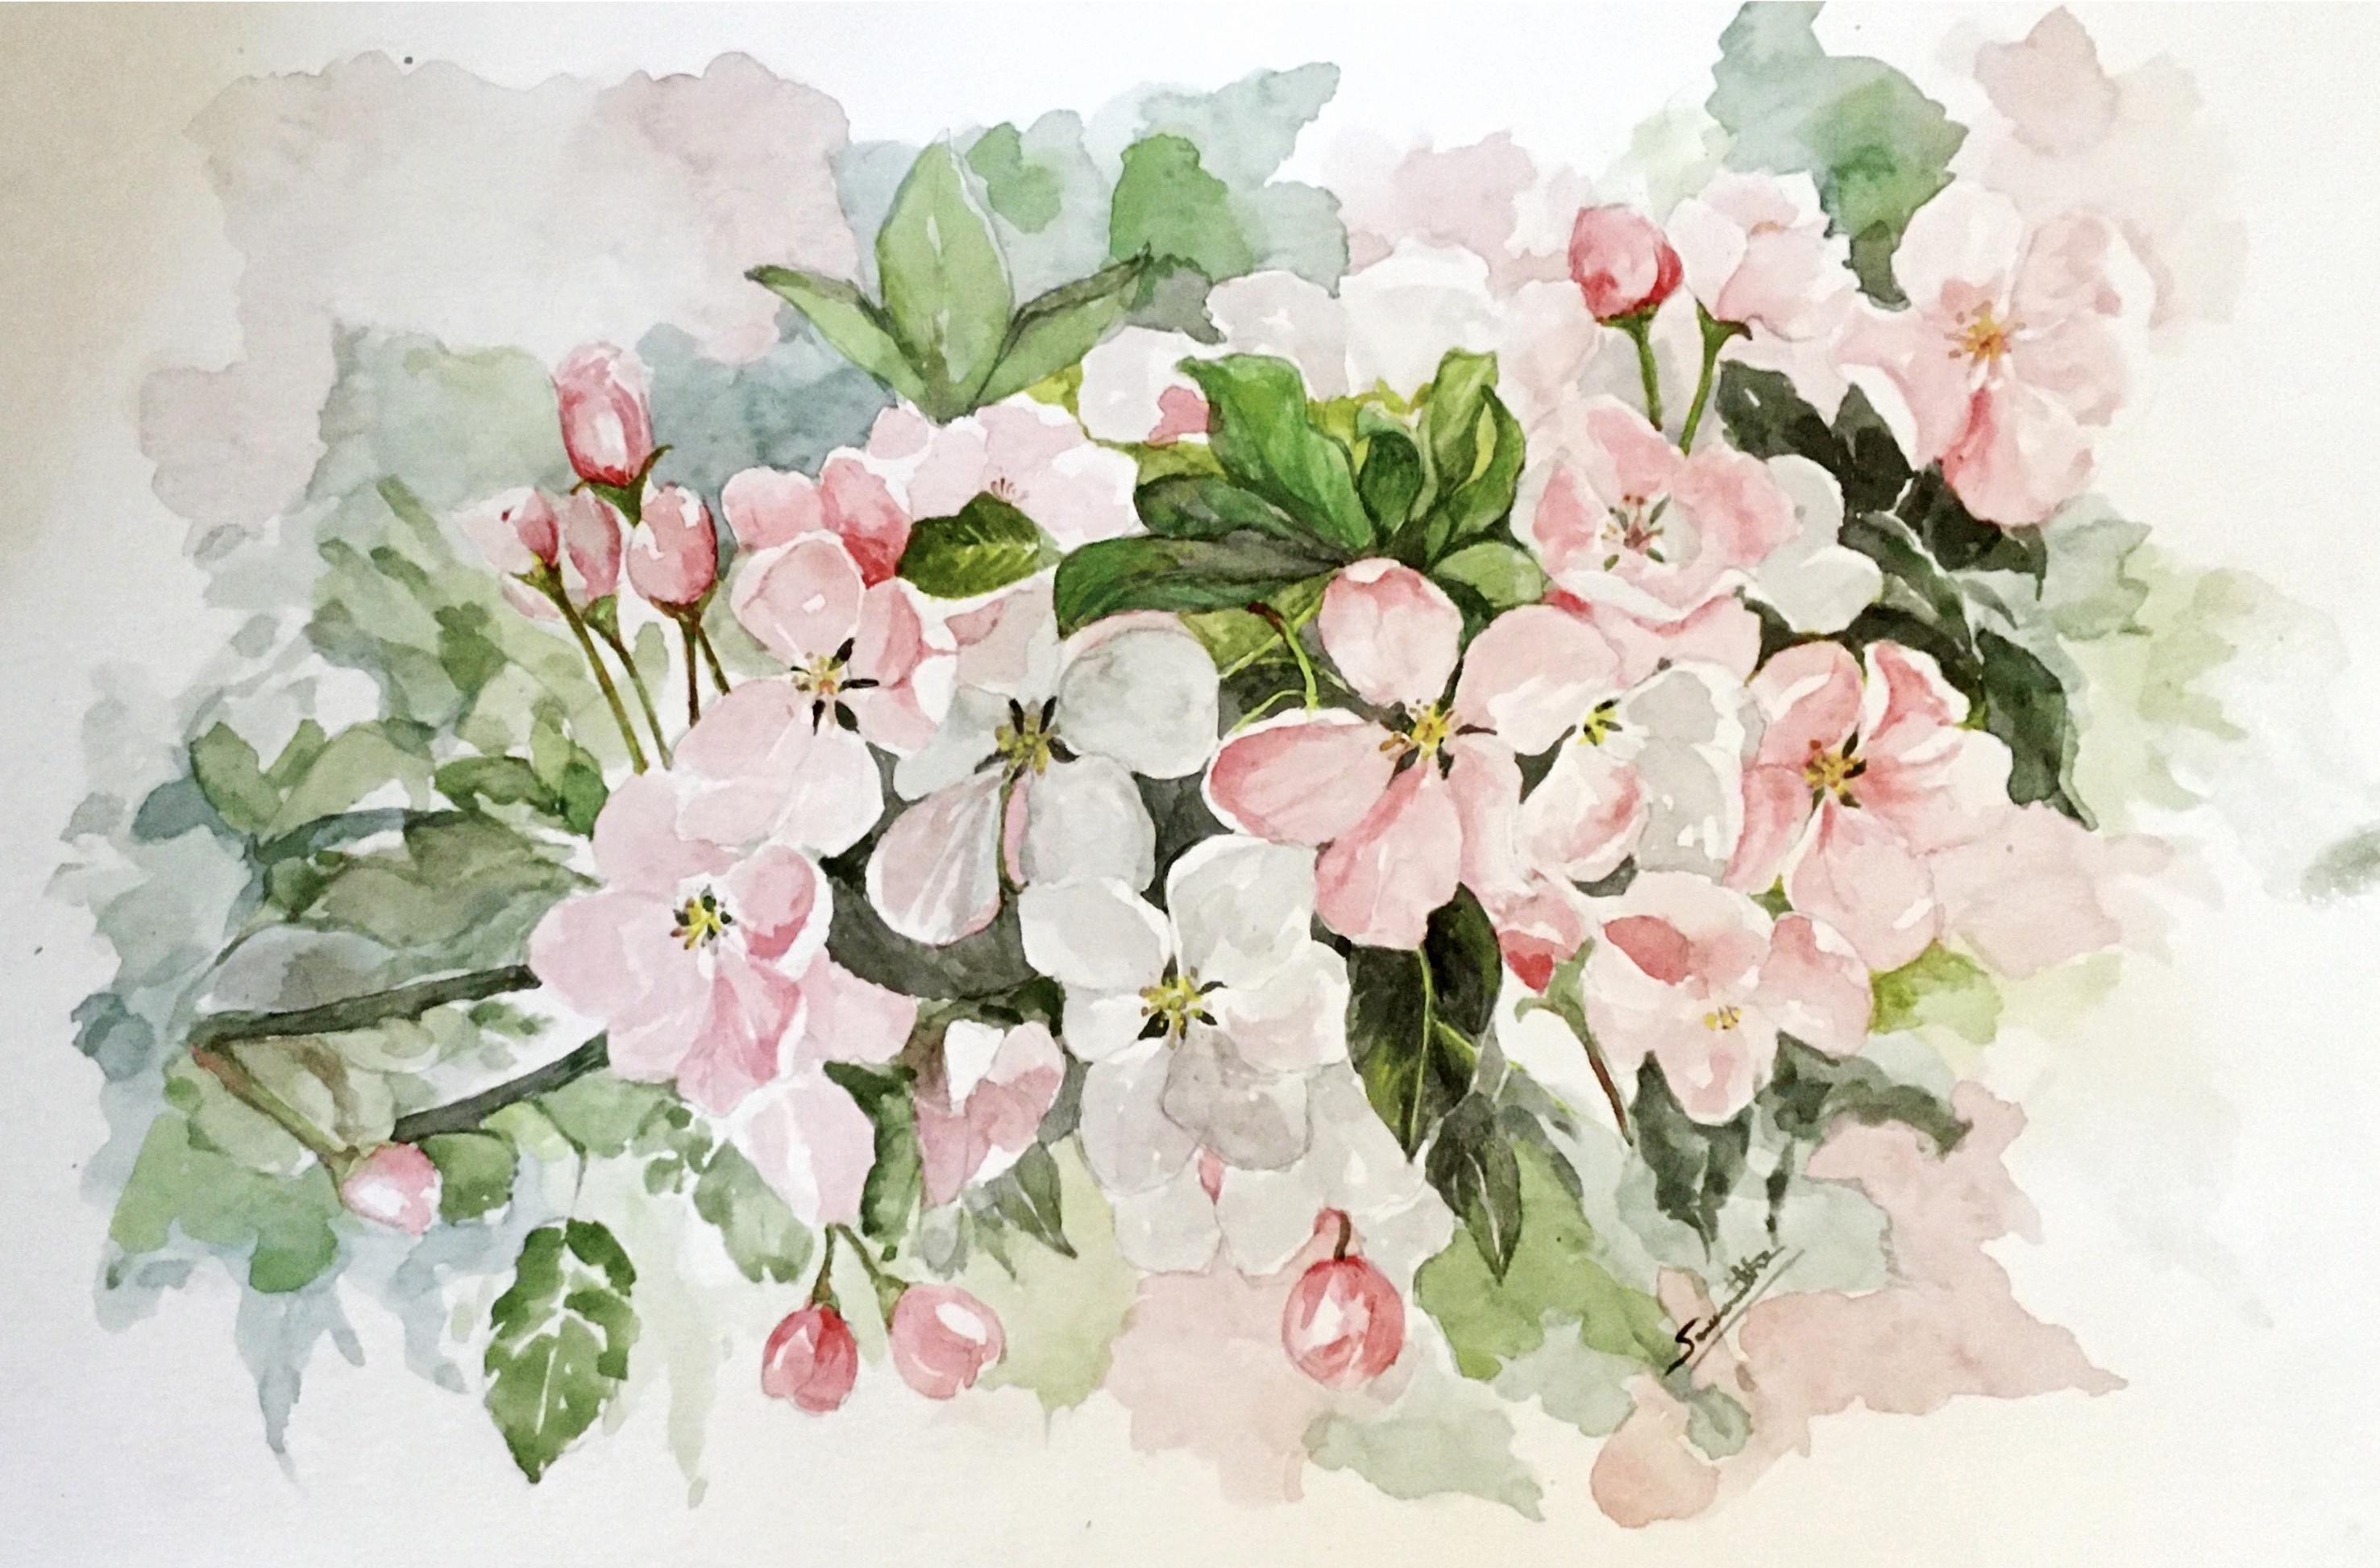 Apple flowers by Samantha Wijesinghe